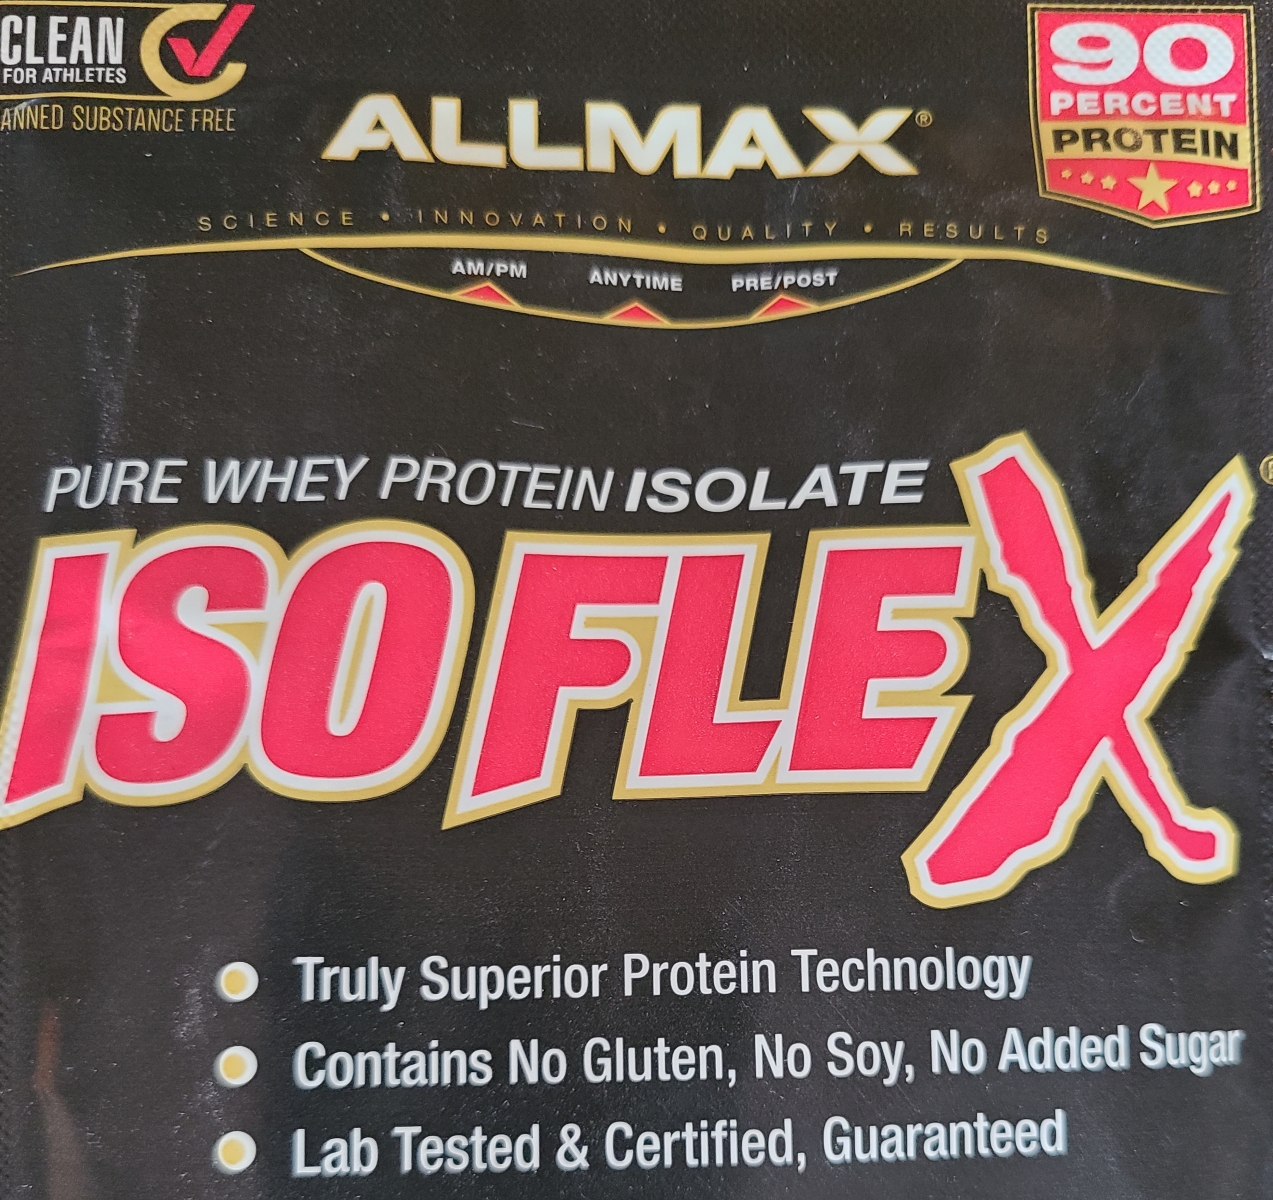 Allmax Isoflex - Pure Whey Protein Powder Isolate